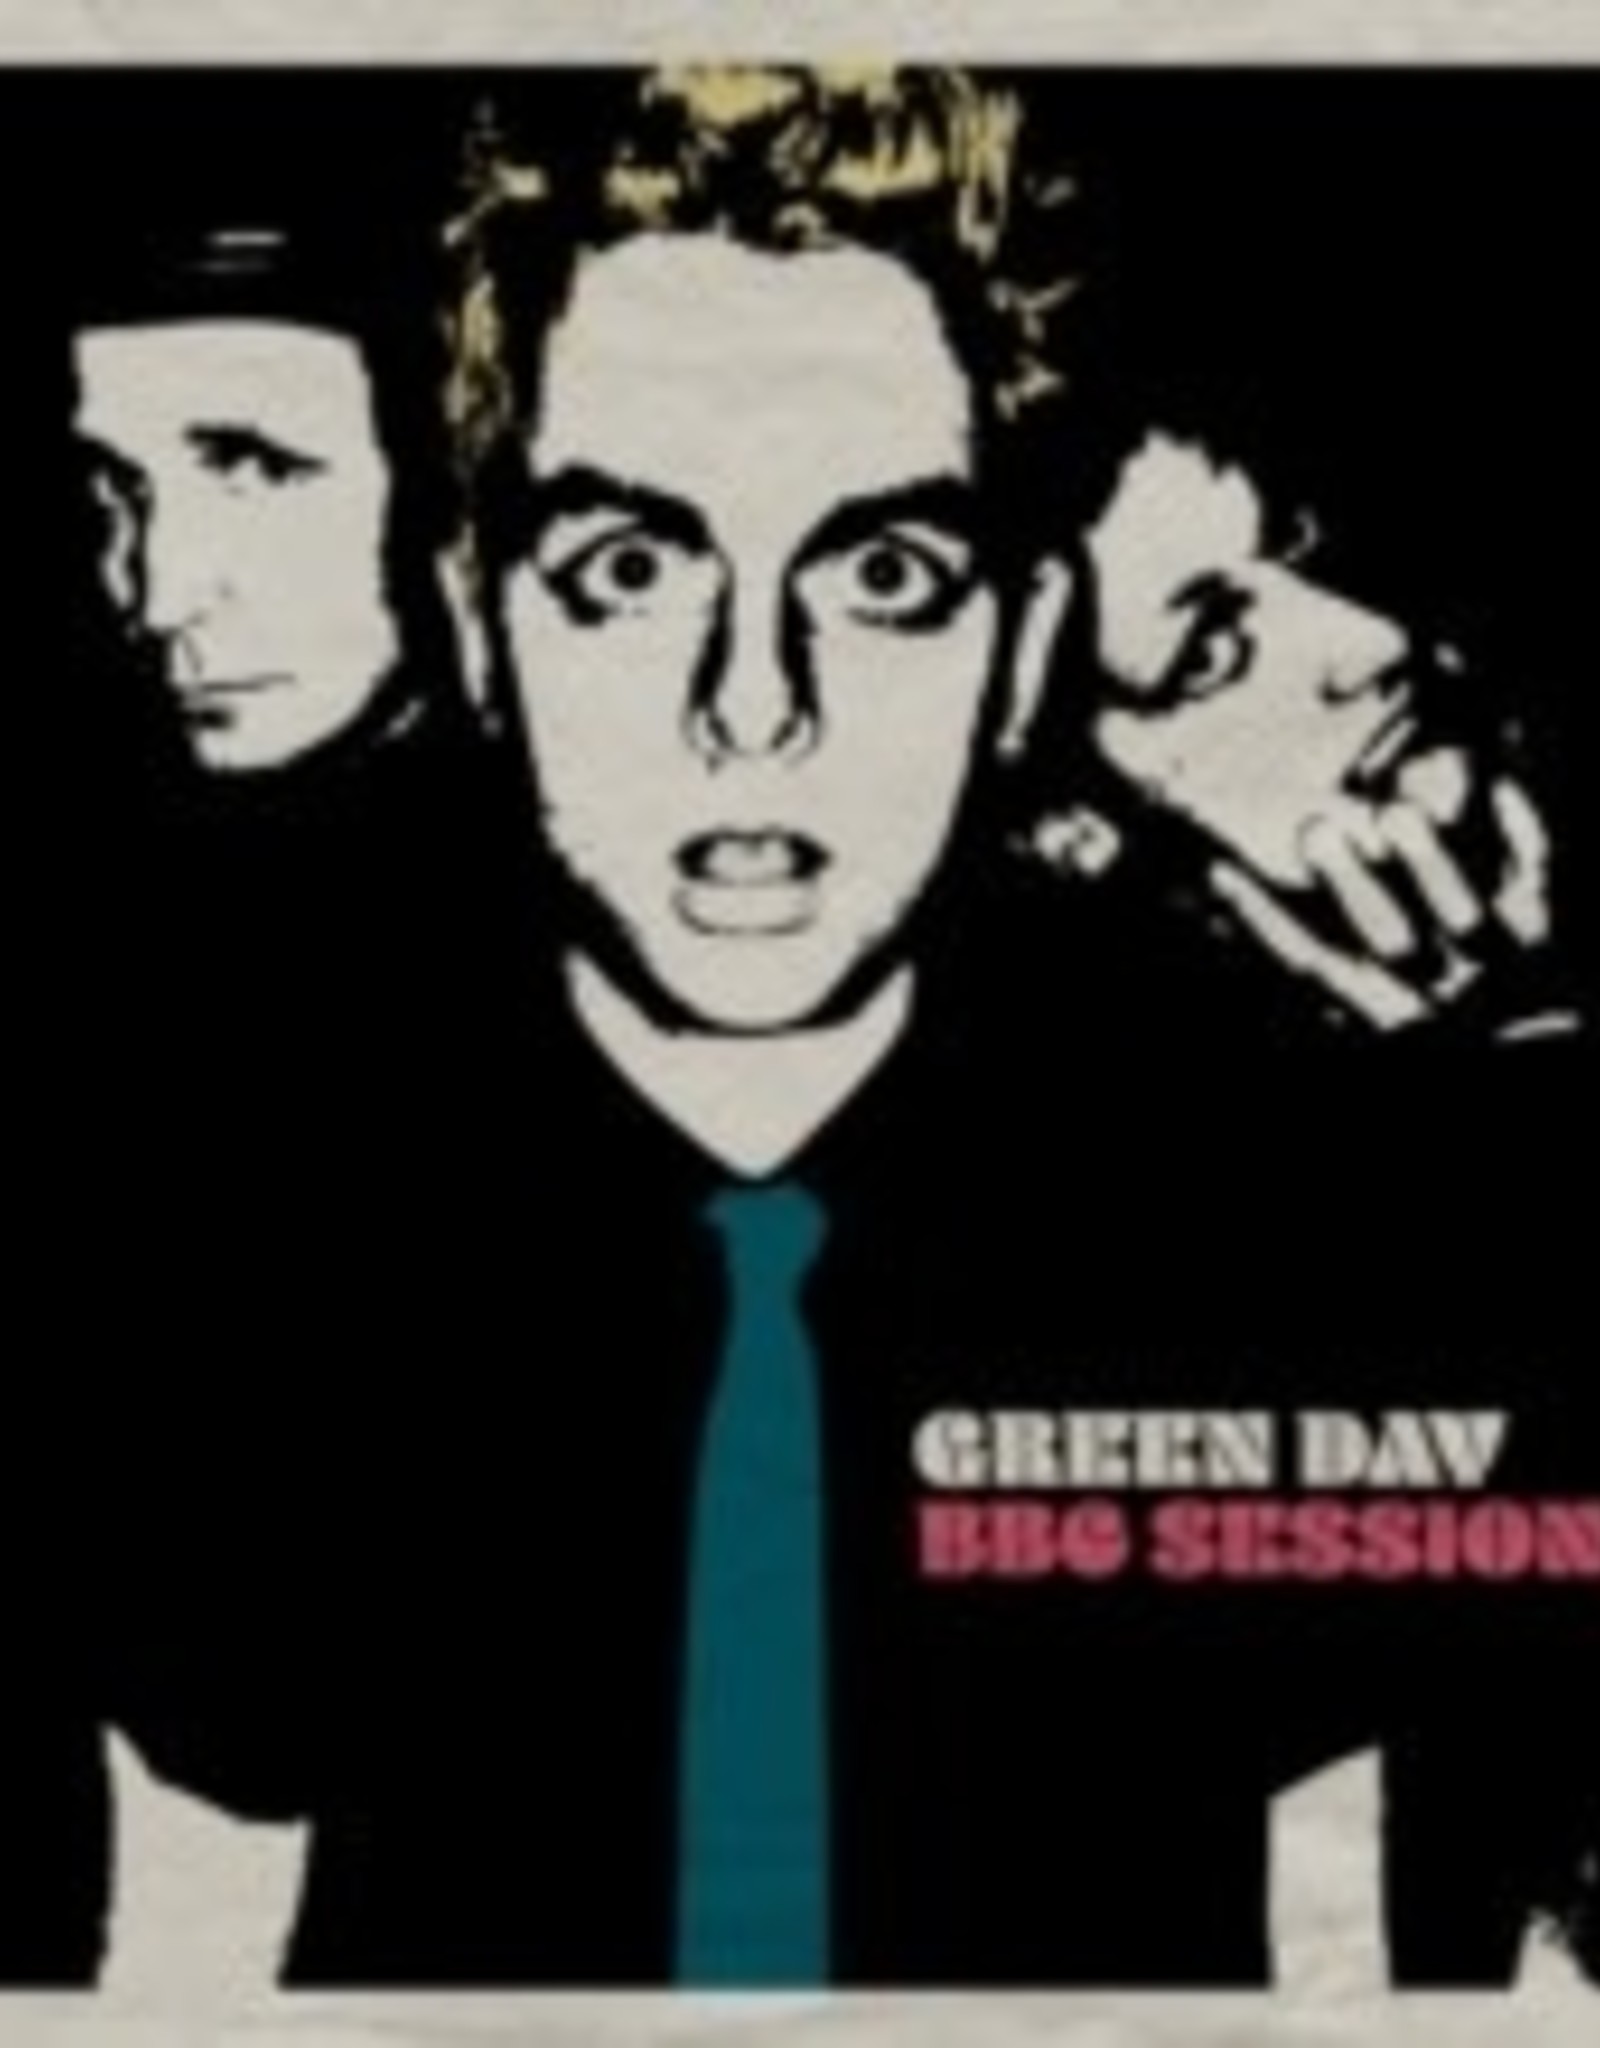 Green Day - BBC Sessions (White Vinyl)